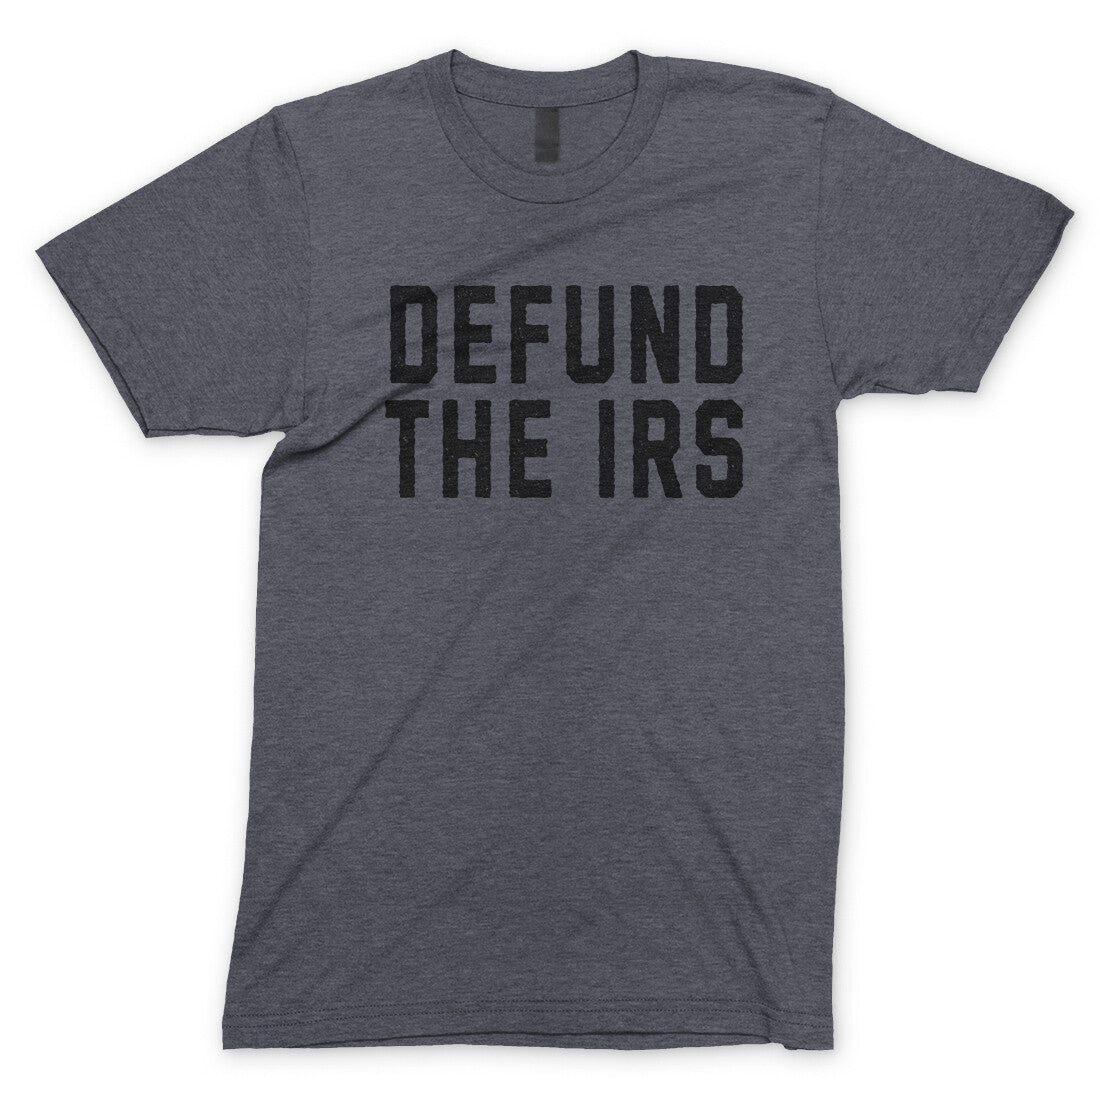 Defund the IRS in Dark Heather Color